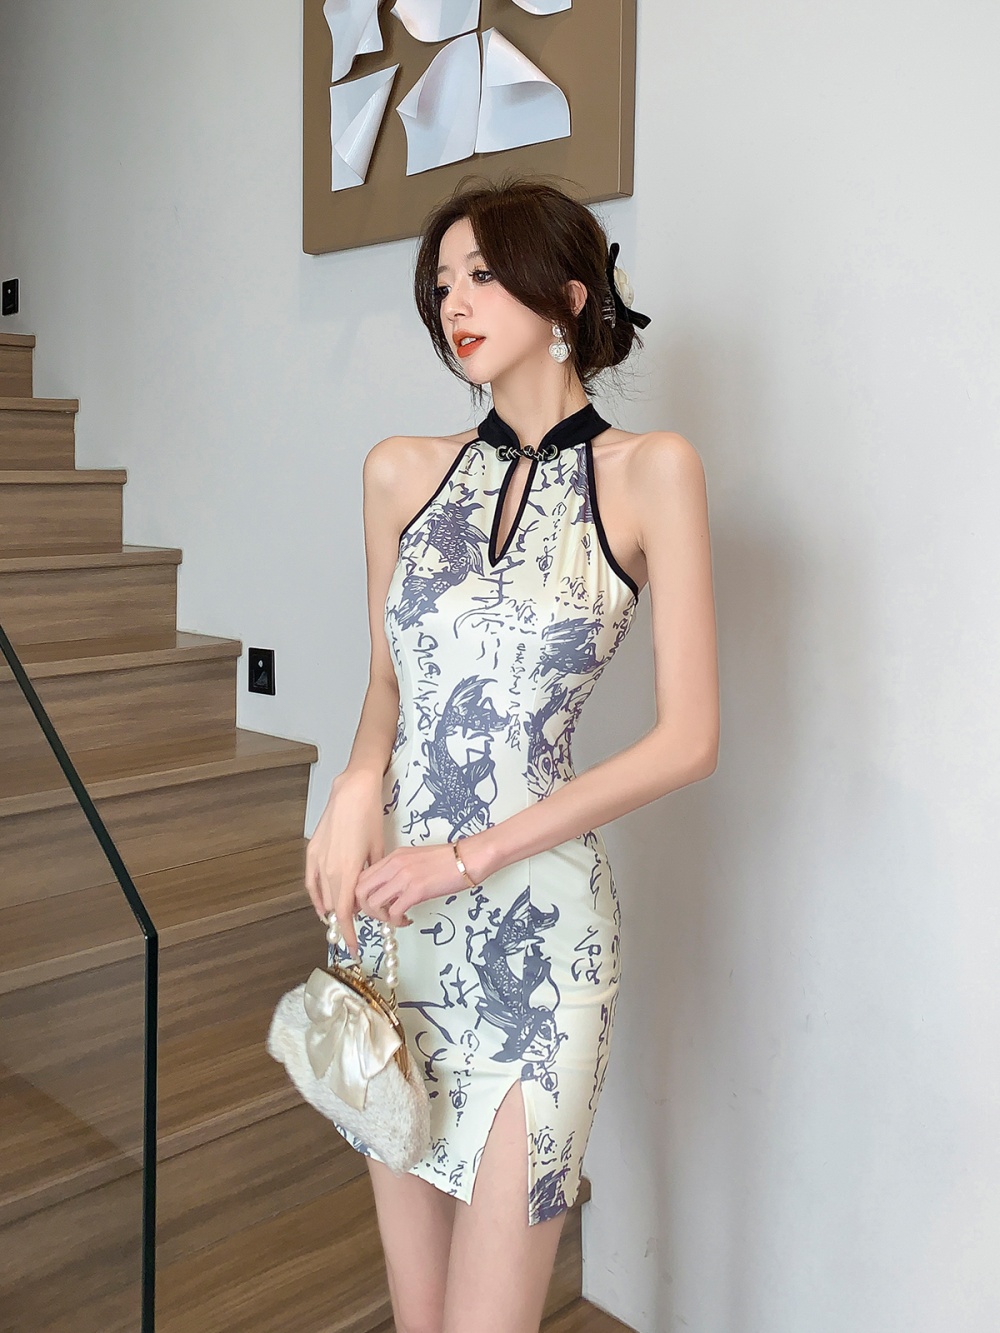 Halter split dress package hip Chinese style cheongsam